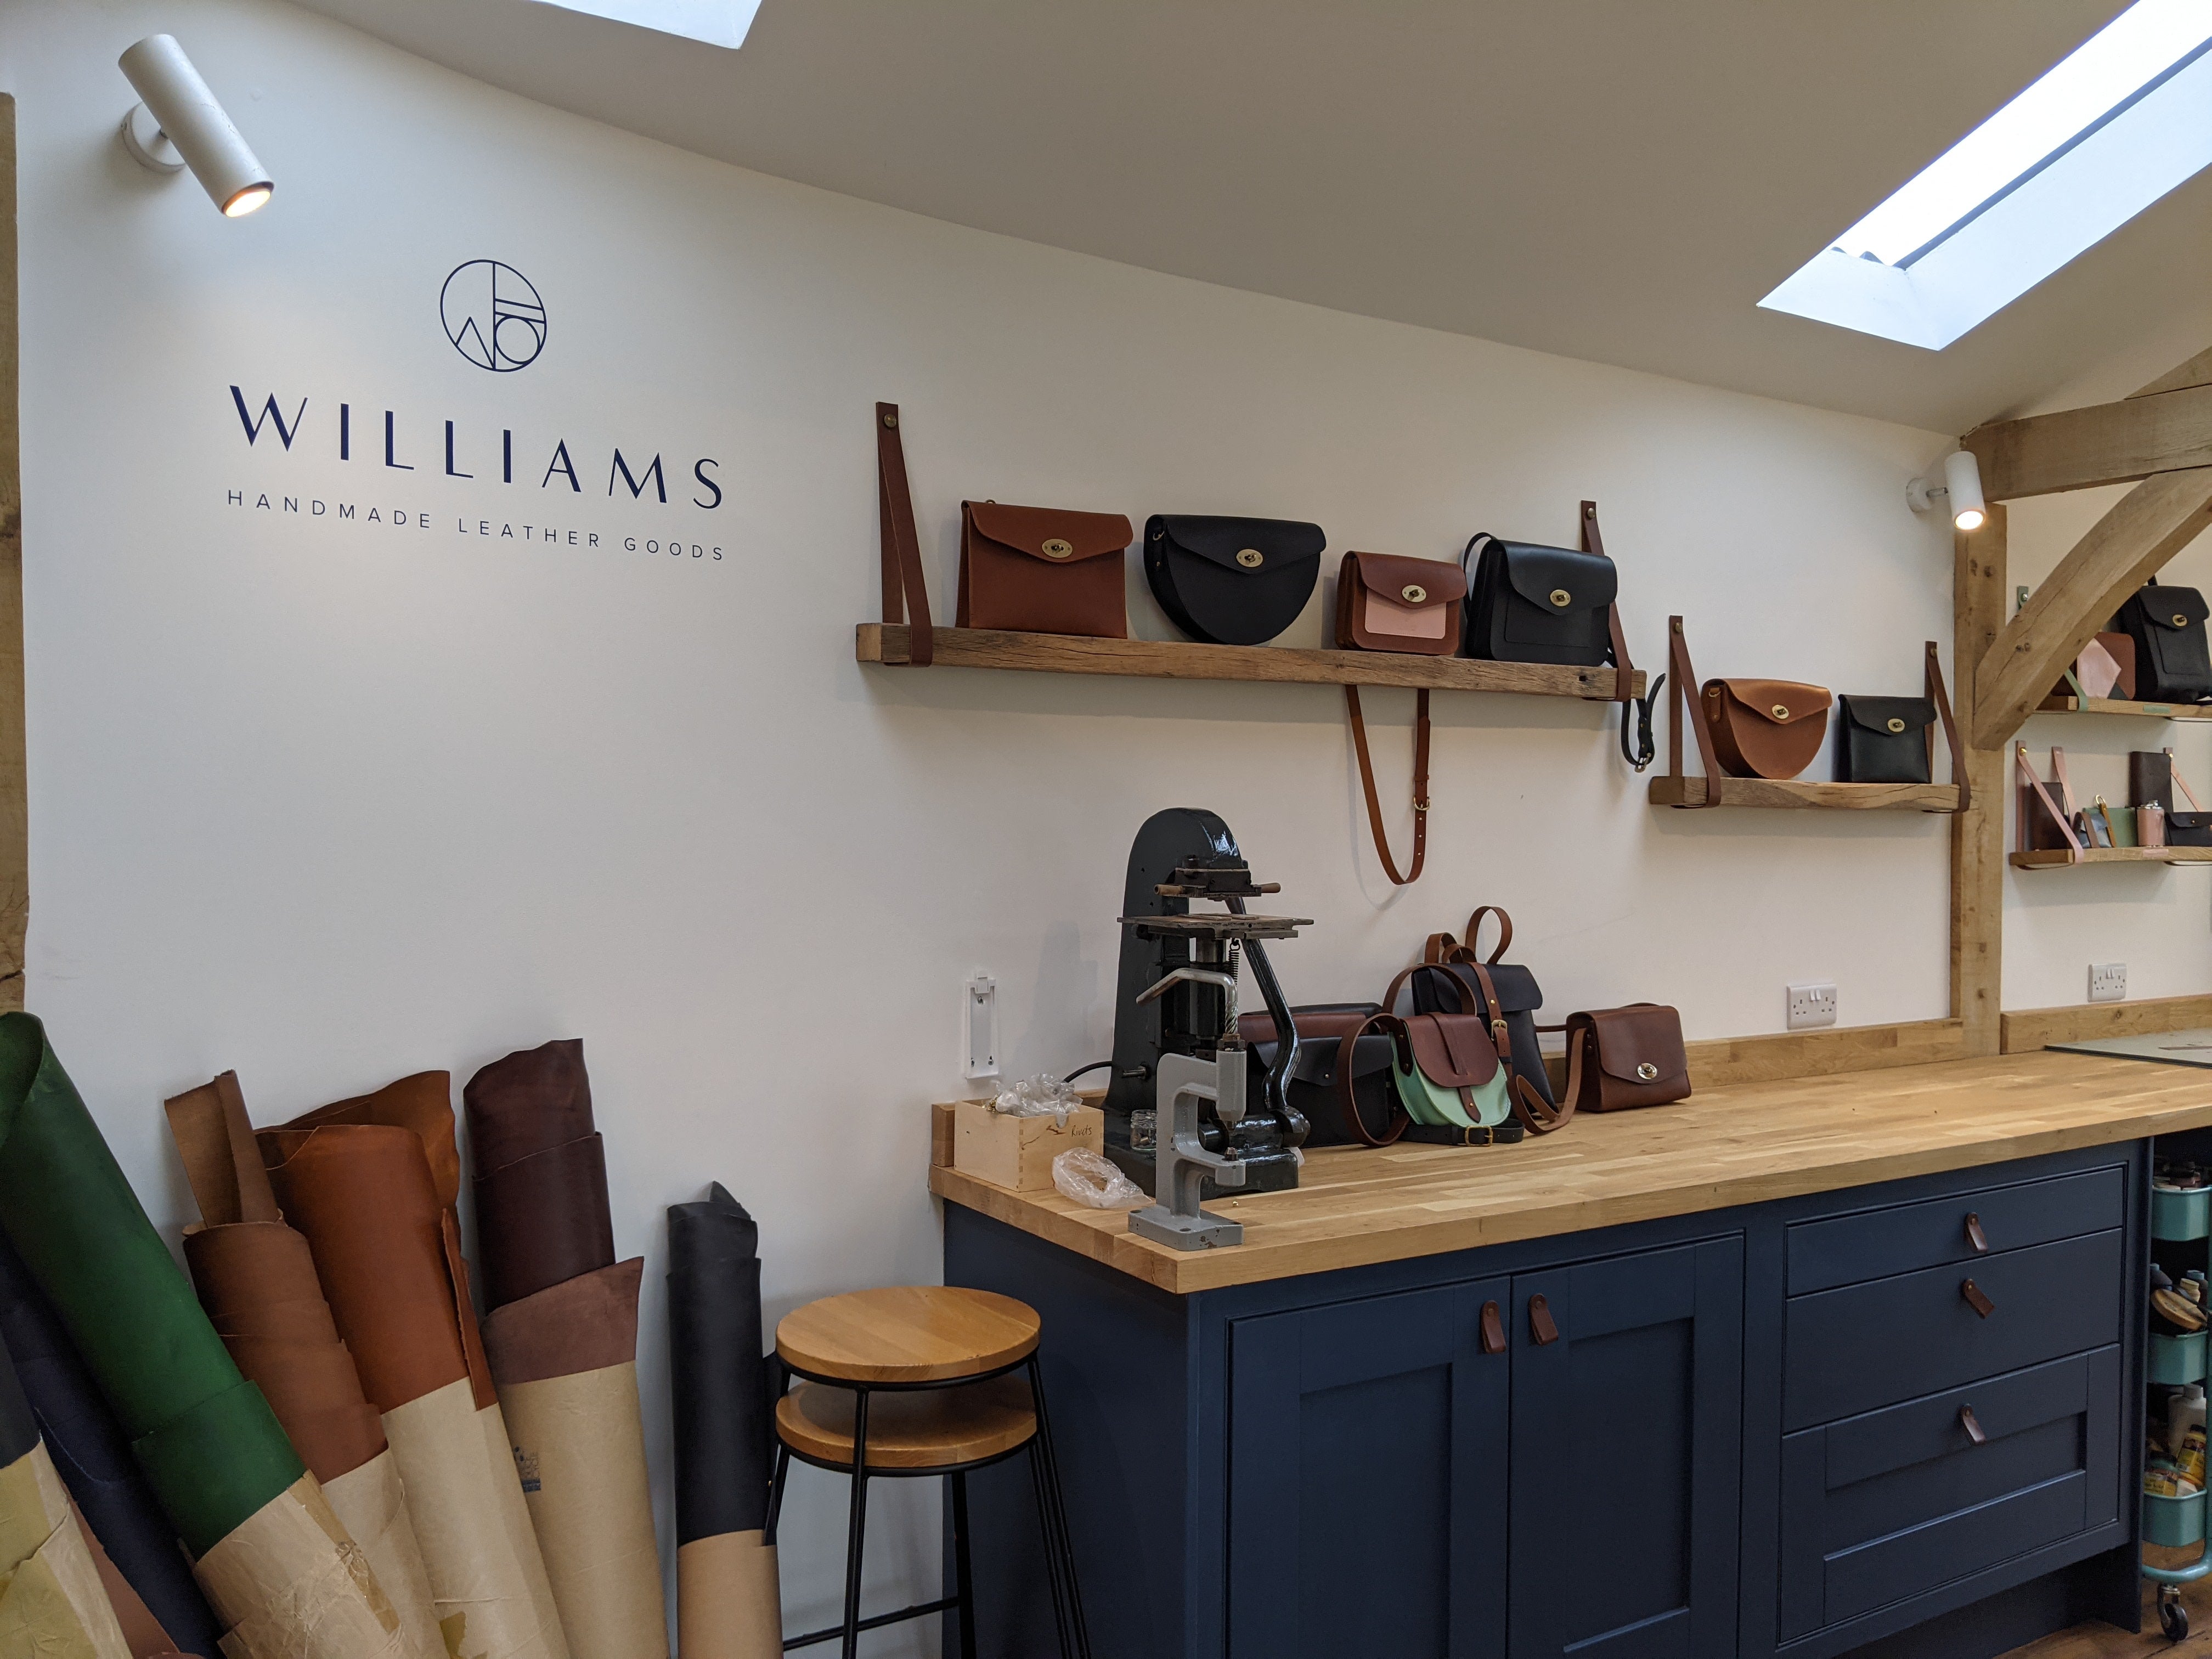 The home studio of leather goods brand Williams Handmade